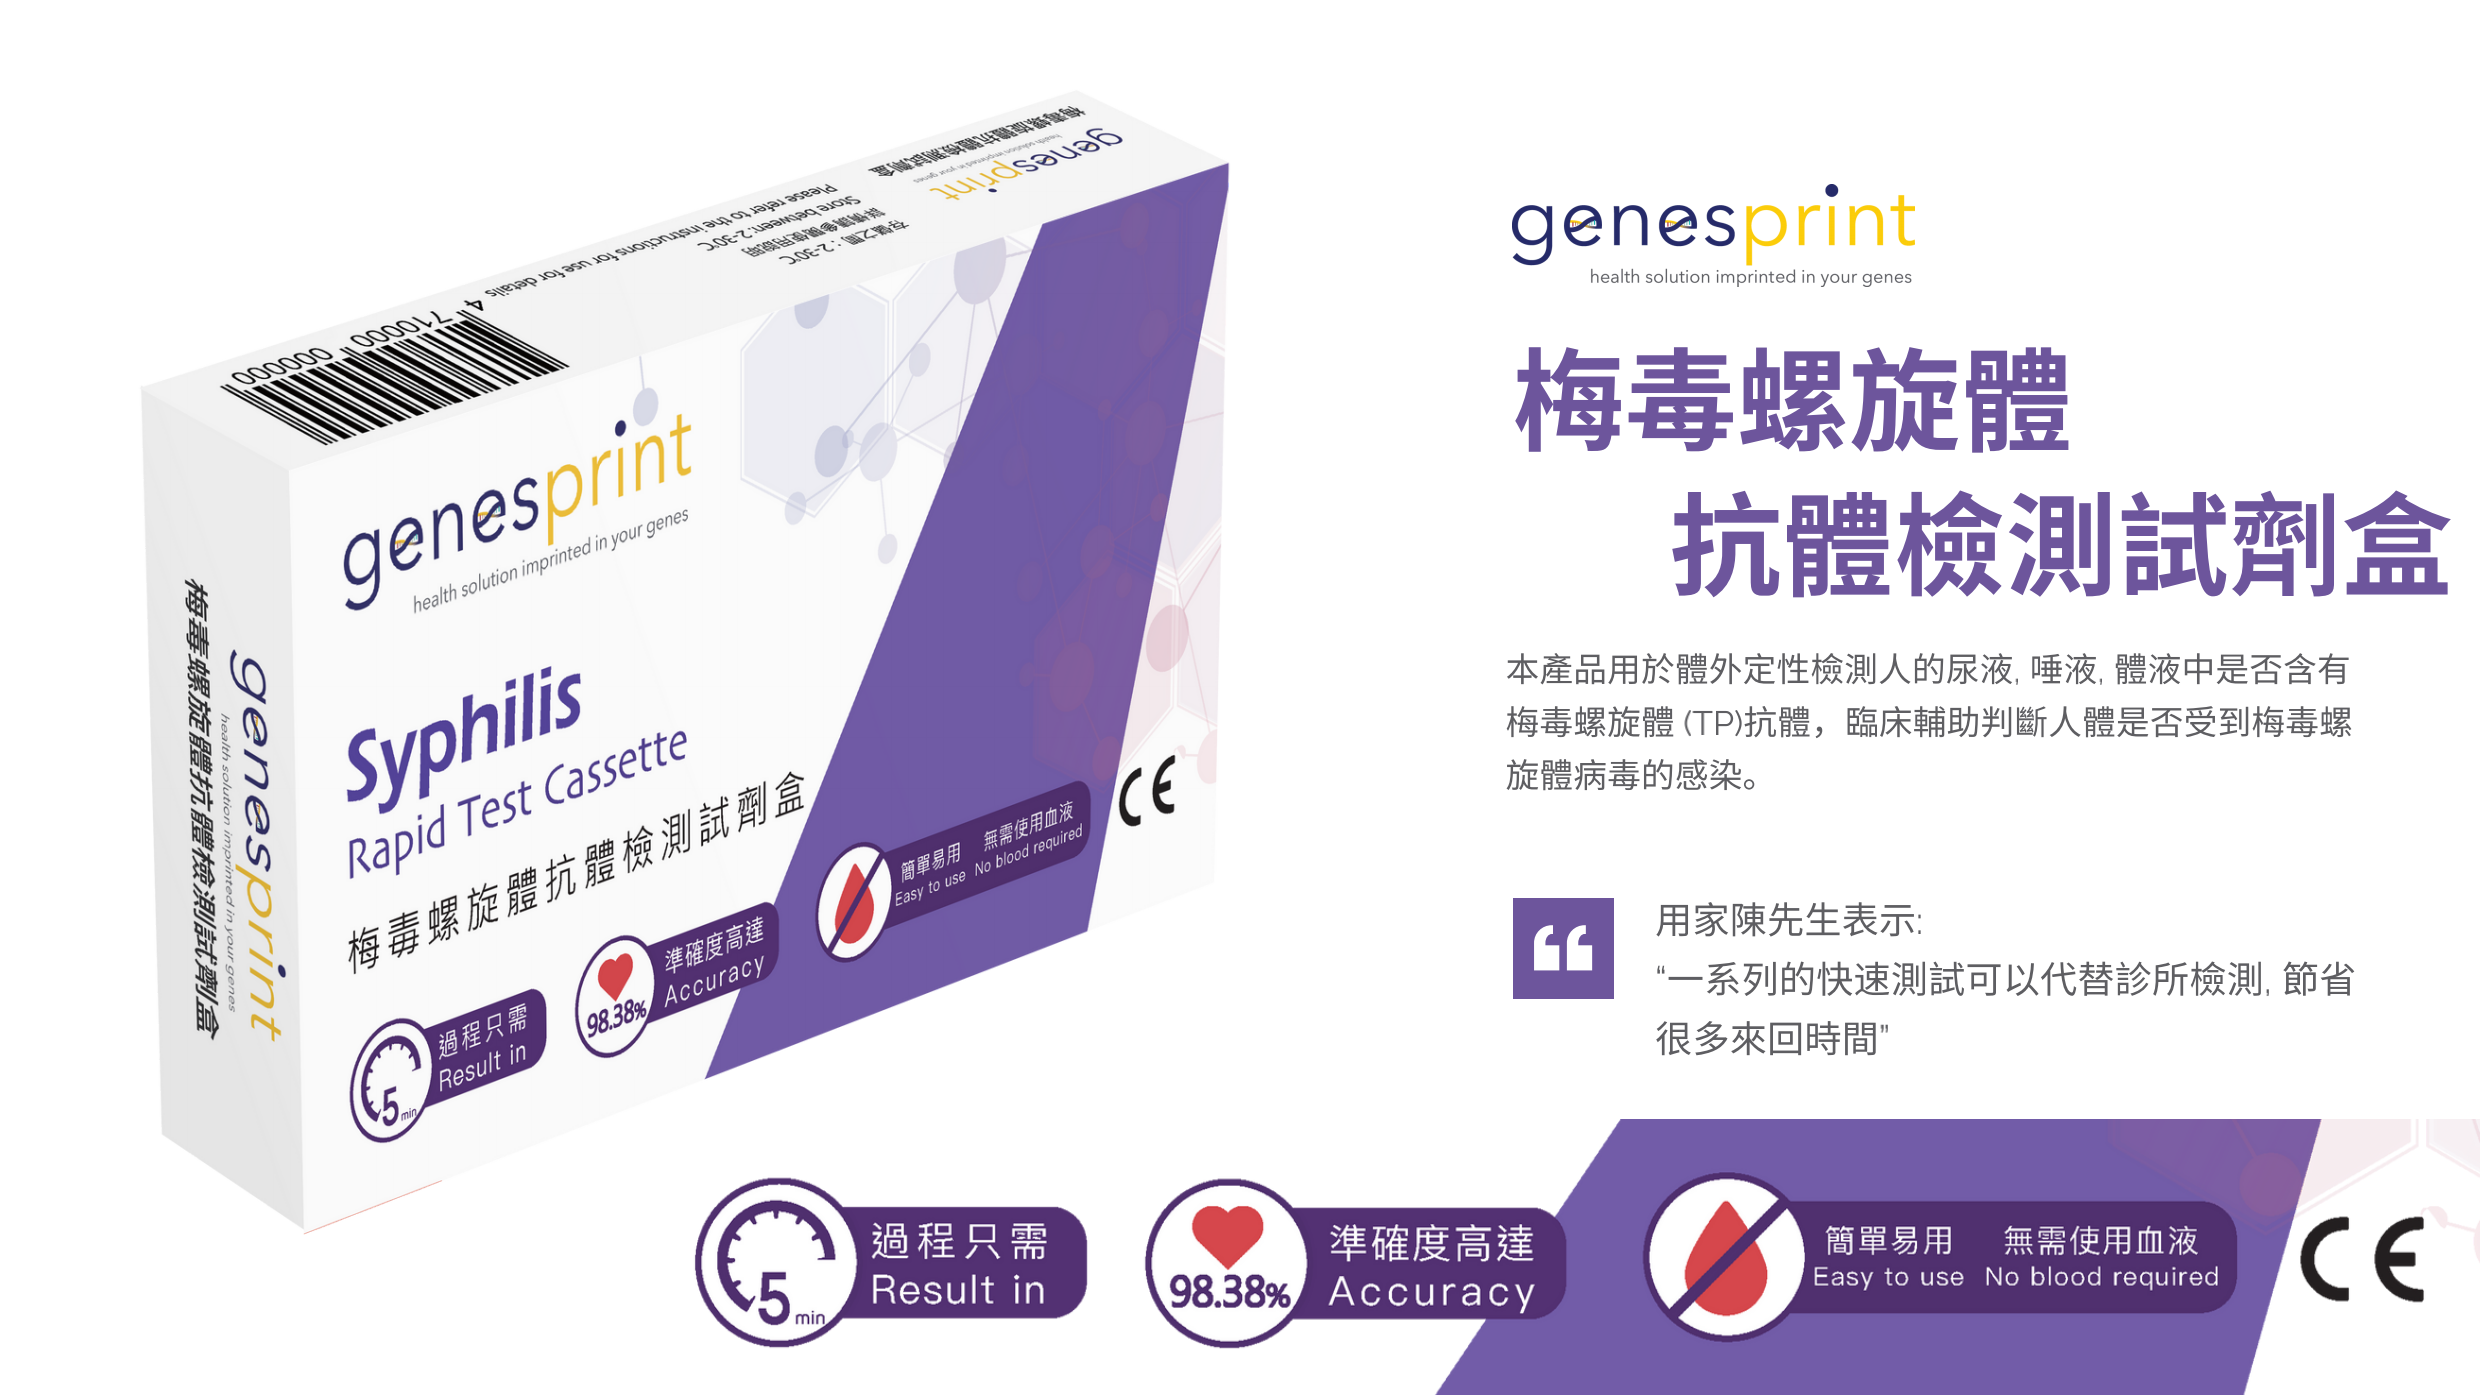 Genesprint - 陰道滴蟲抗原檢測試劑盒